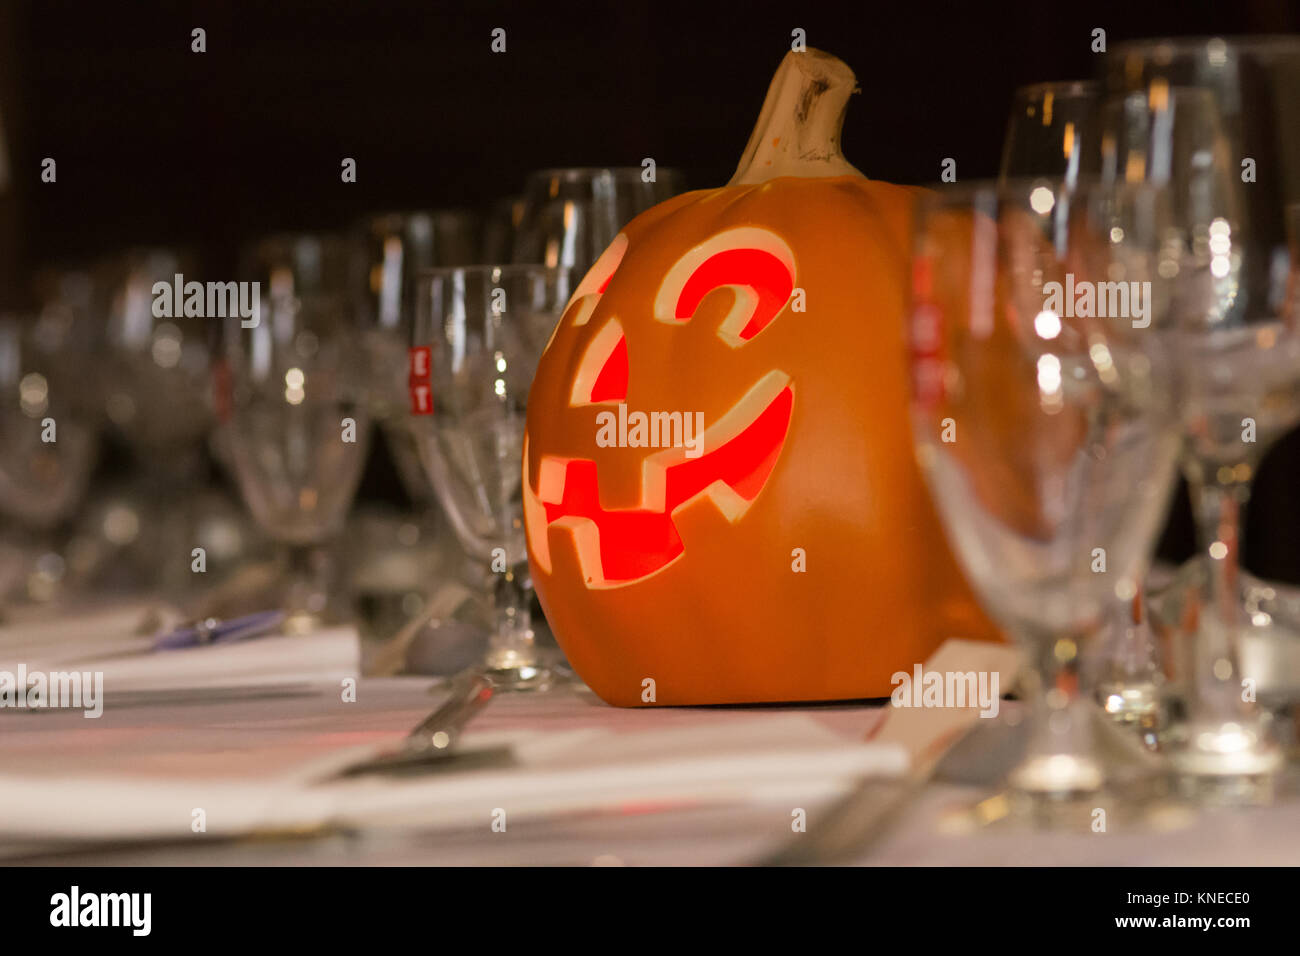 An illuminated artificial pumpkin sits among glasses at a themed wedding. Stock Photo